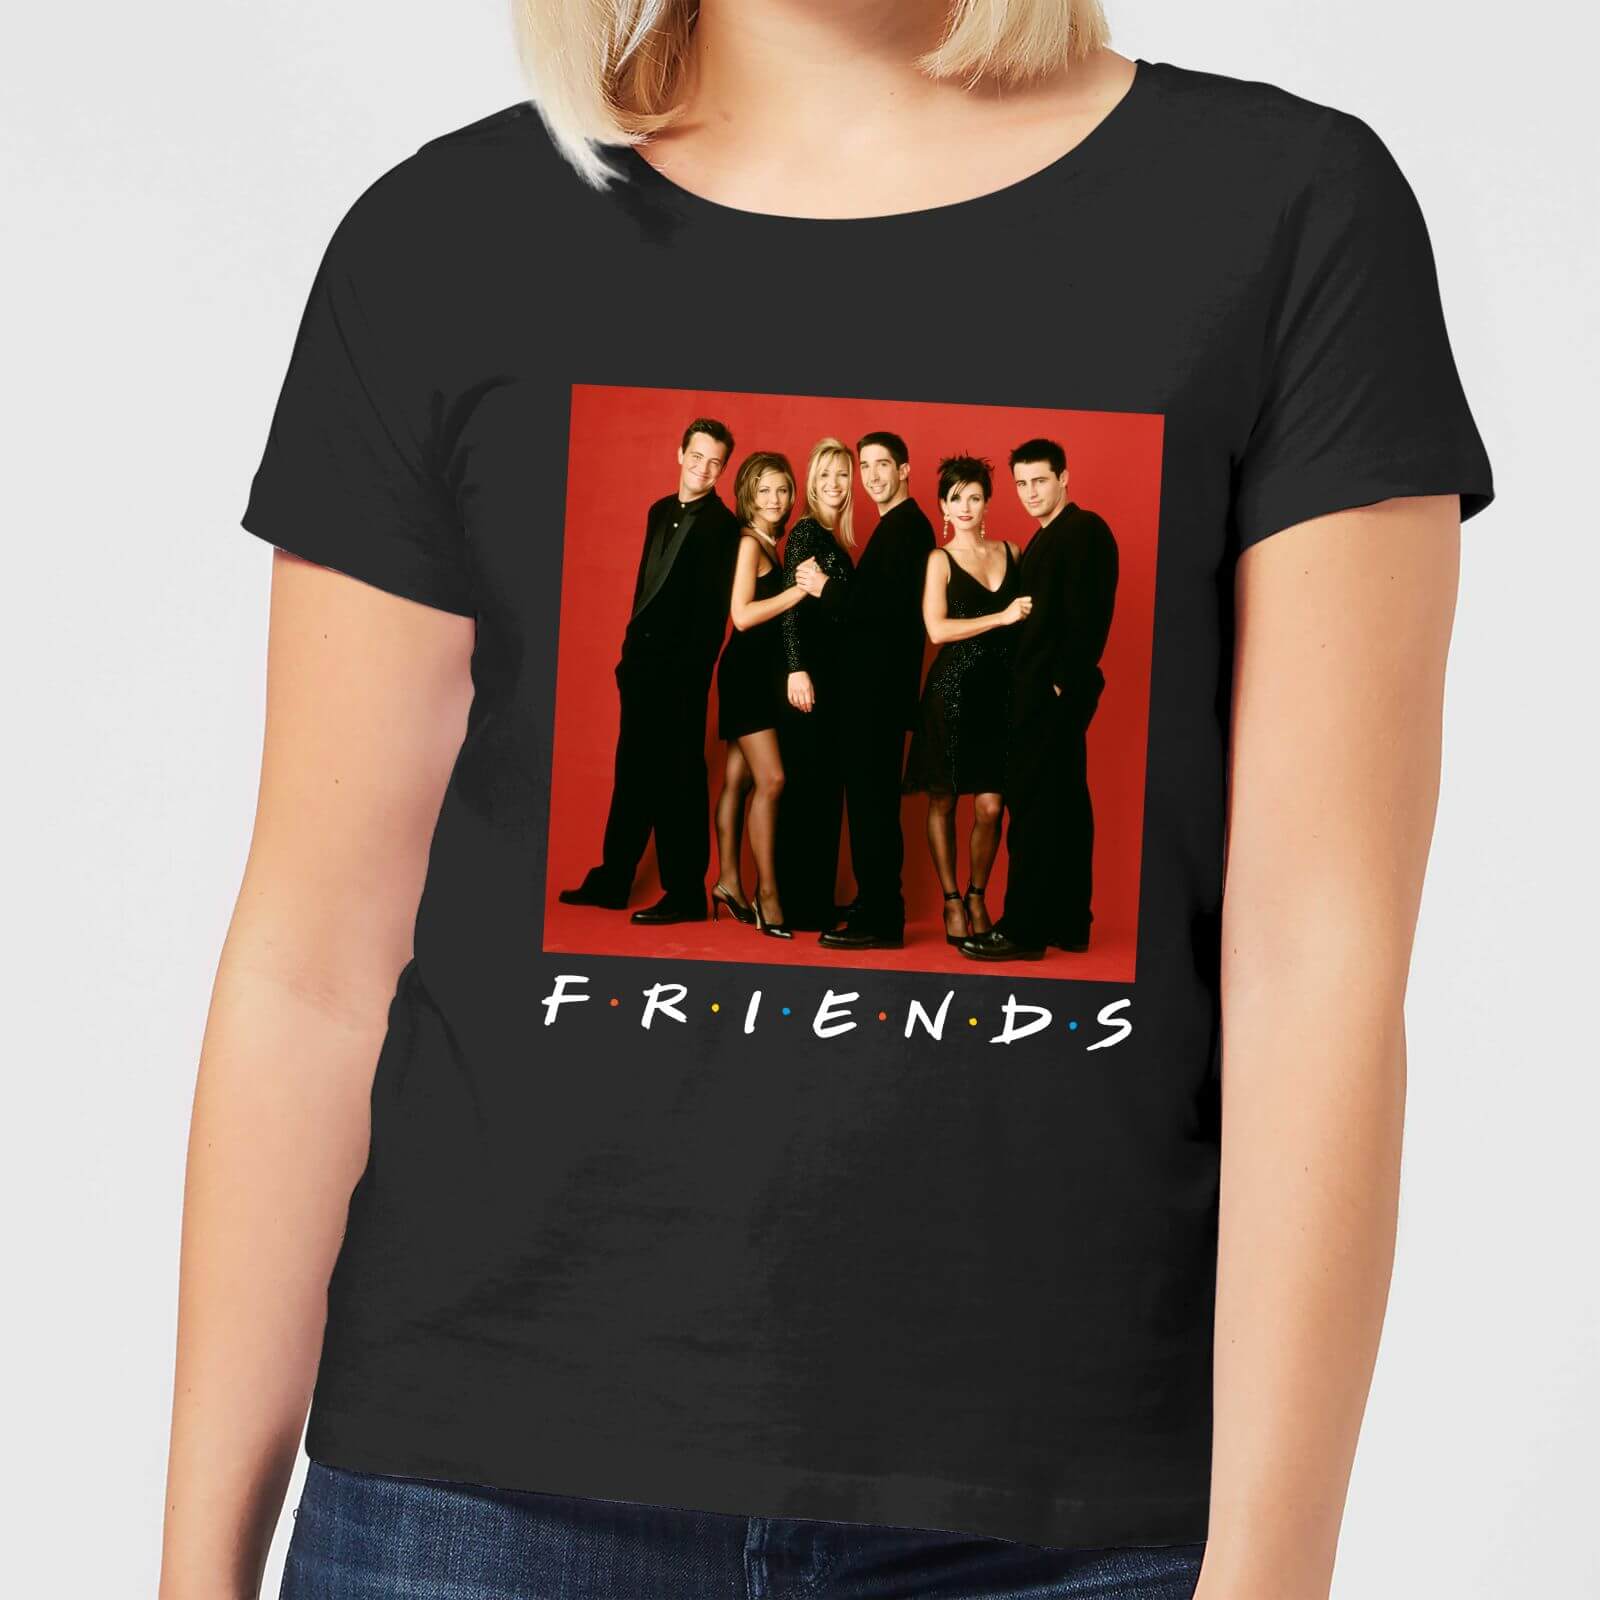 Friends Character Pose Women's T-Shirt - Black - S - Black